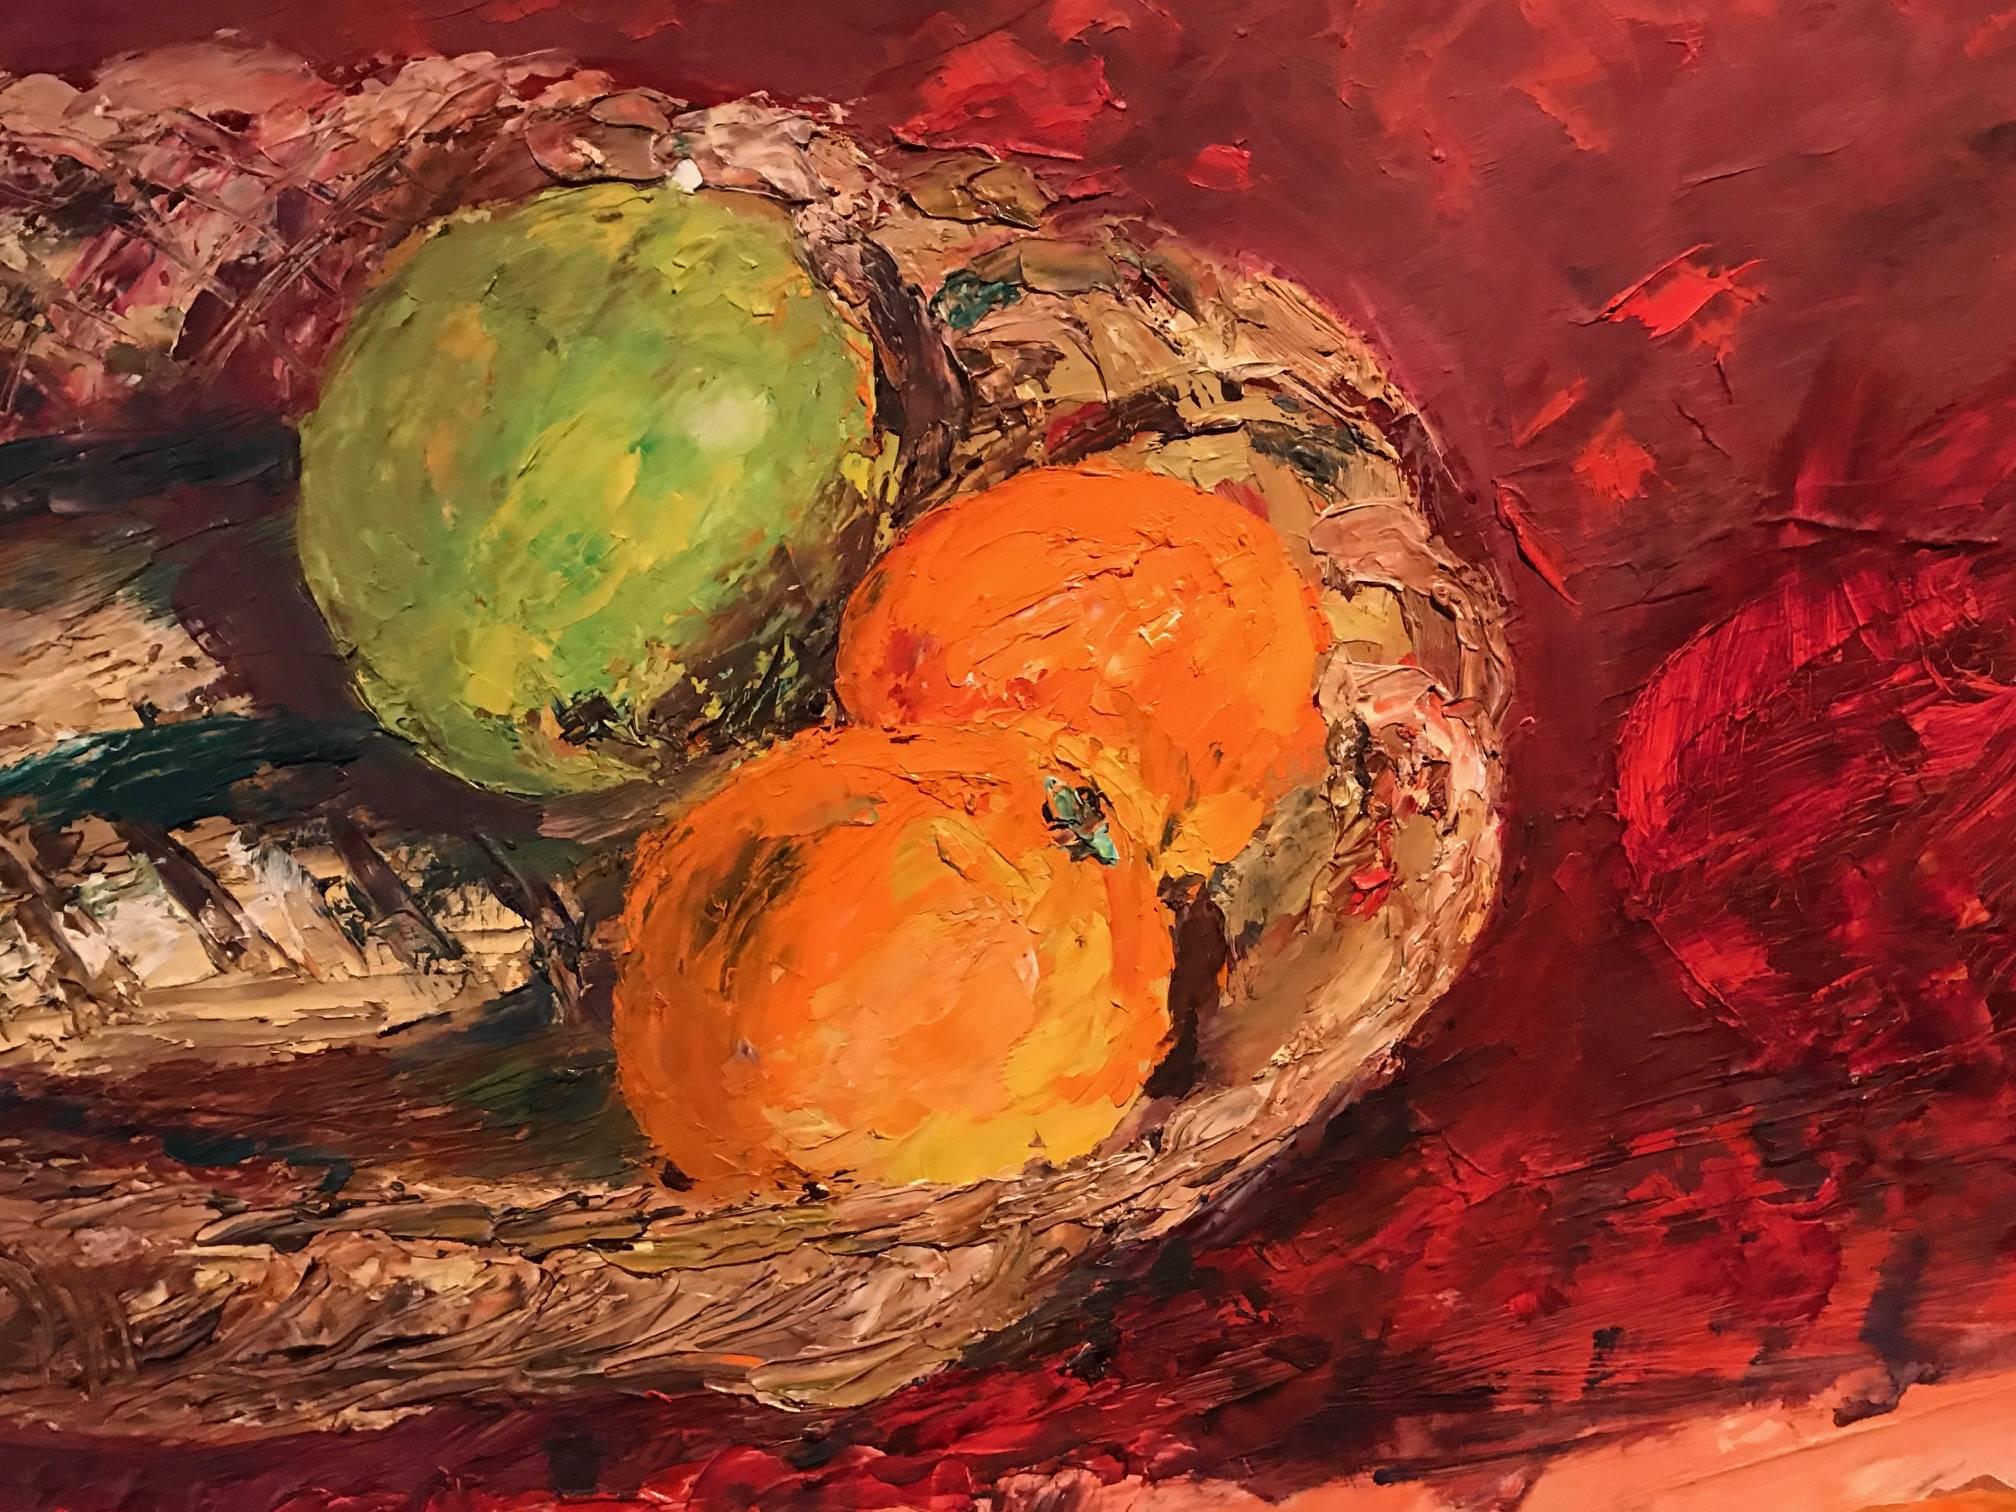 Mid 20thC English Post-Impressionist Still Life Oil - Apple & Oranges 5